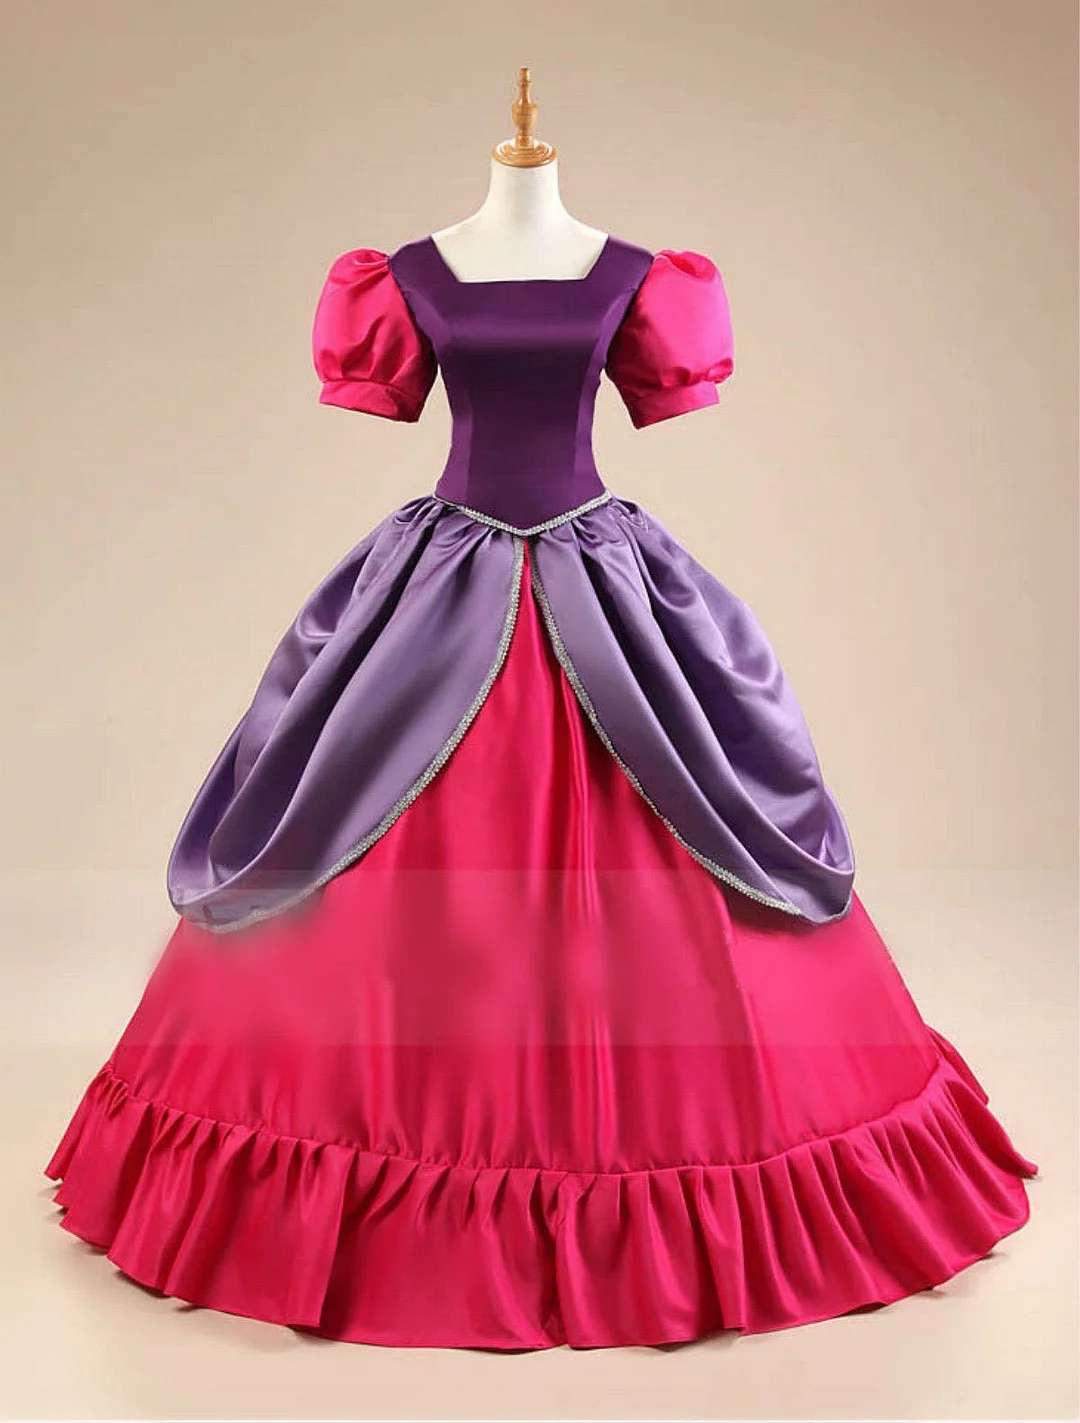 Cinderella's Stepsisters Tremaine Pink Dress Cosplay Costume